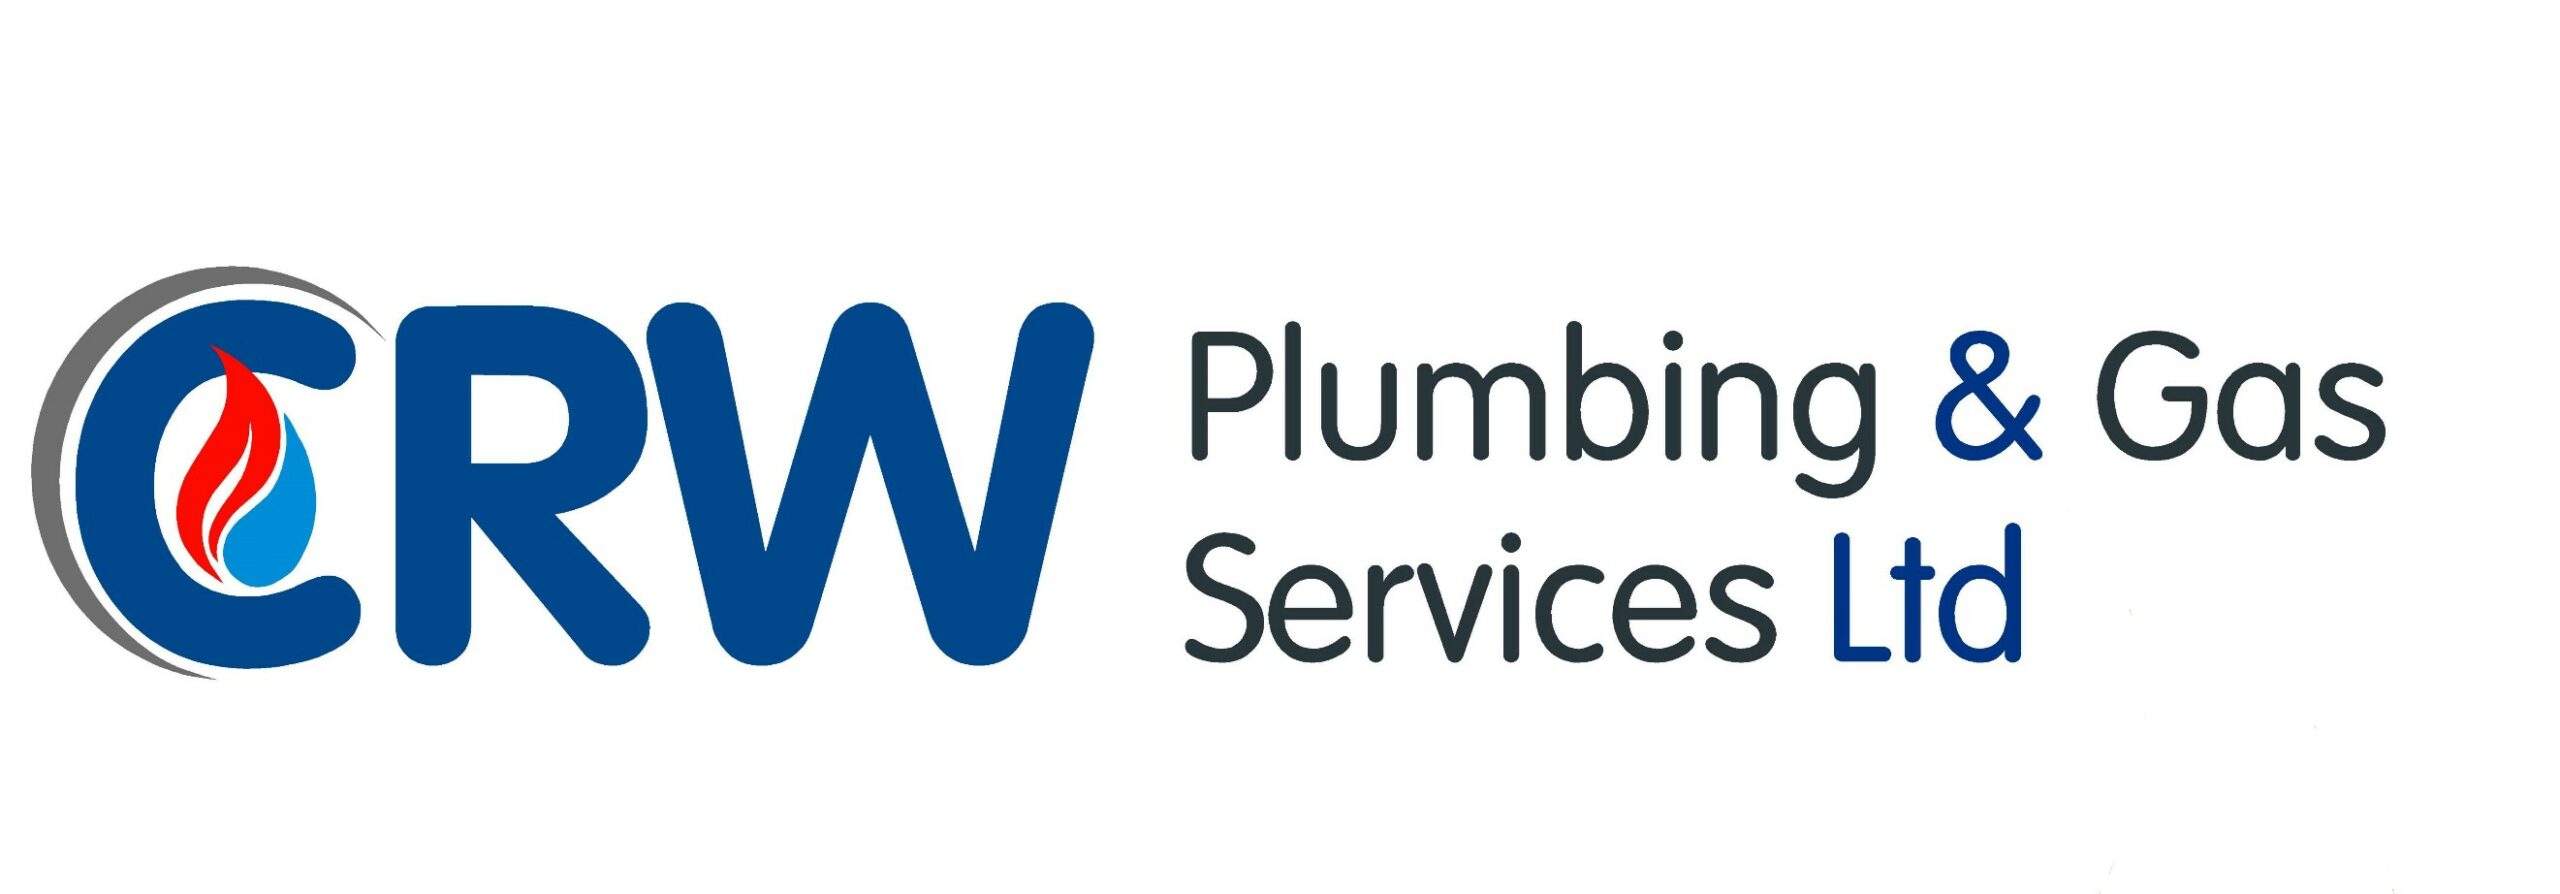 CRW Plumbing & Gas Services